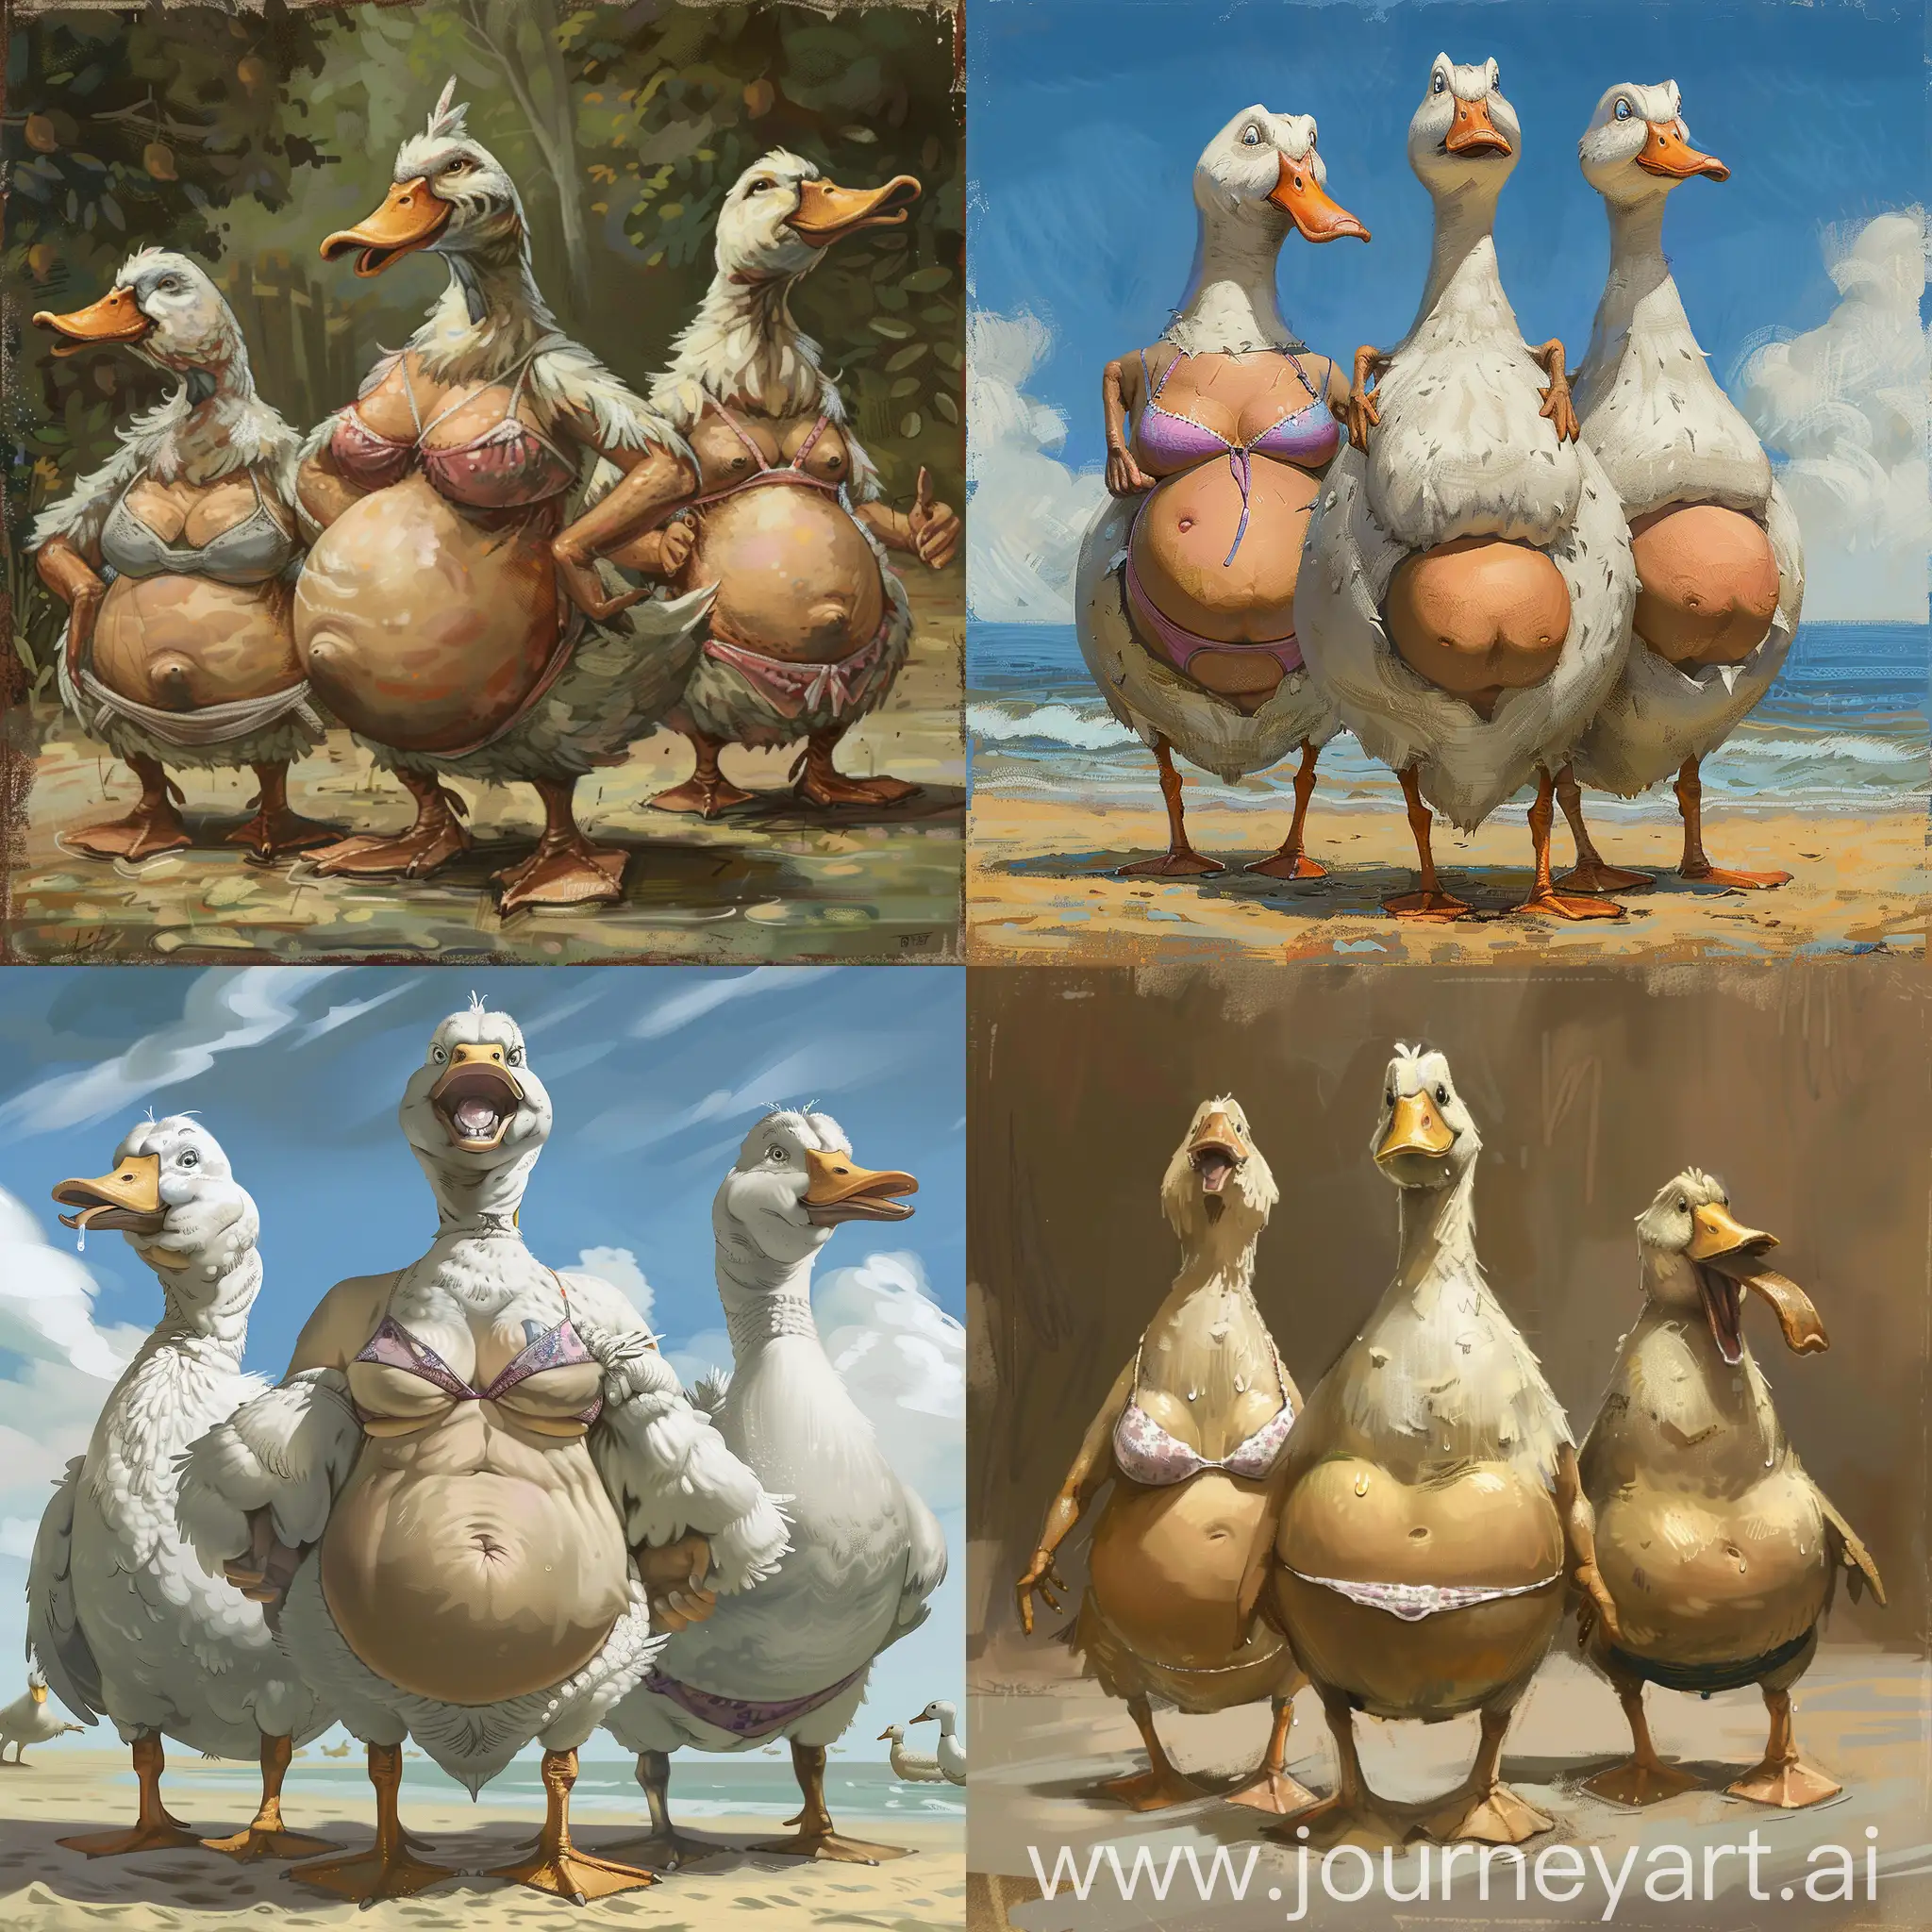 Humorous-Ducks-Wearing-Bikinis-and-Mankini